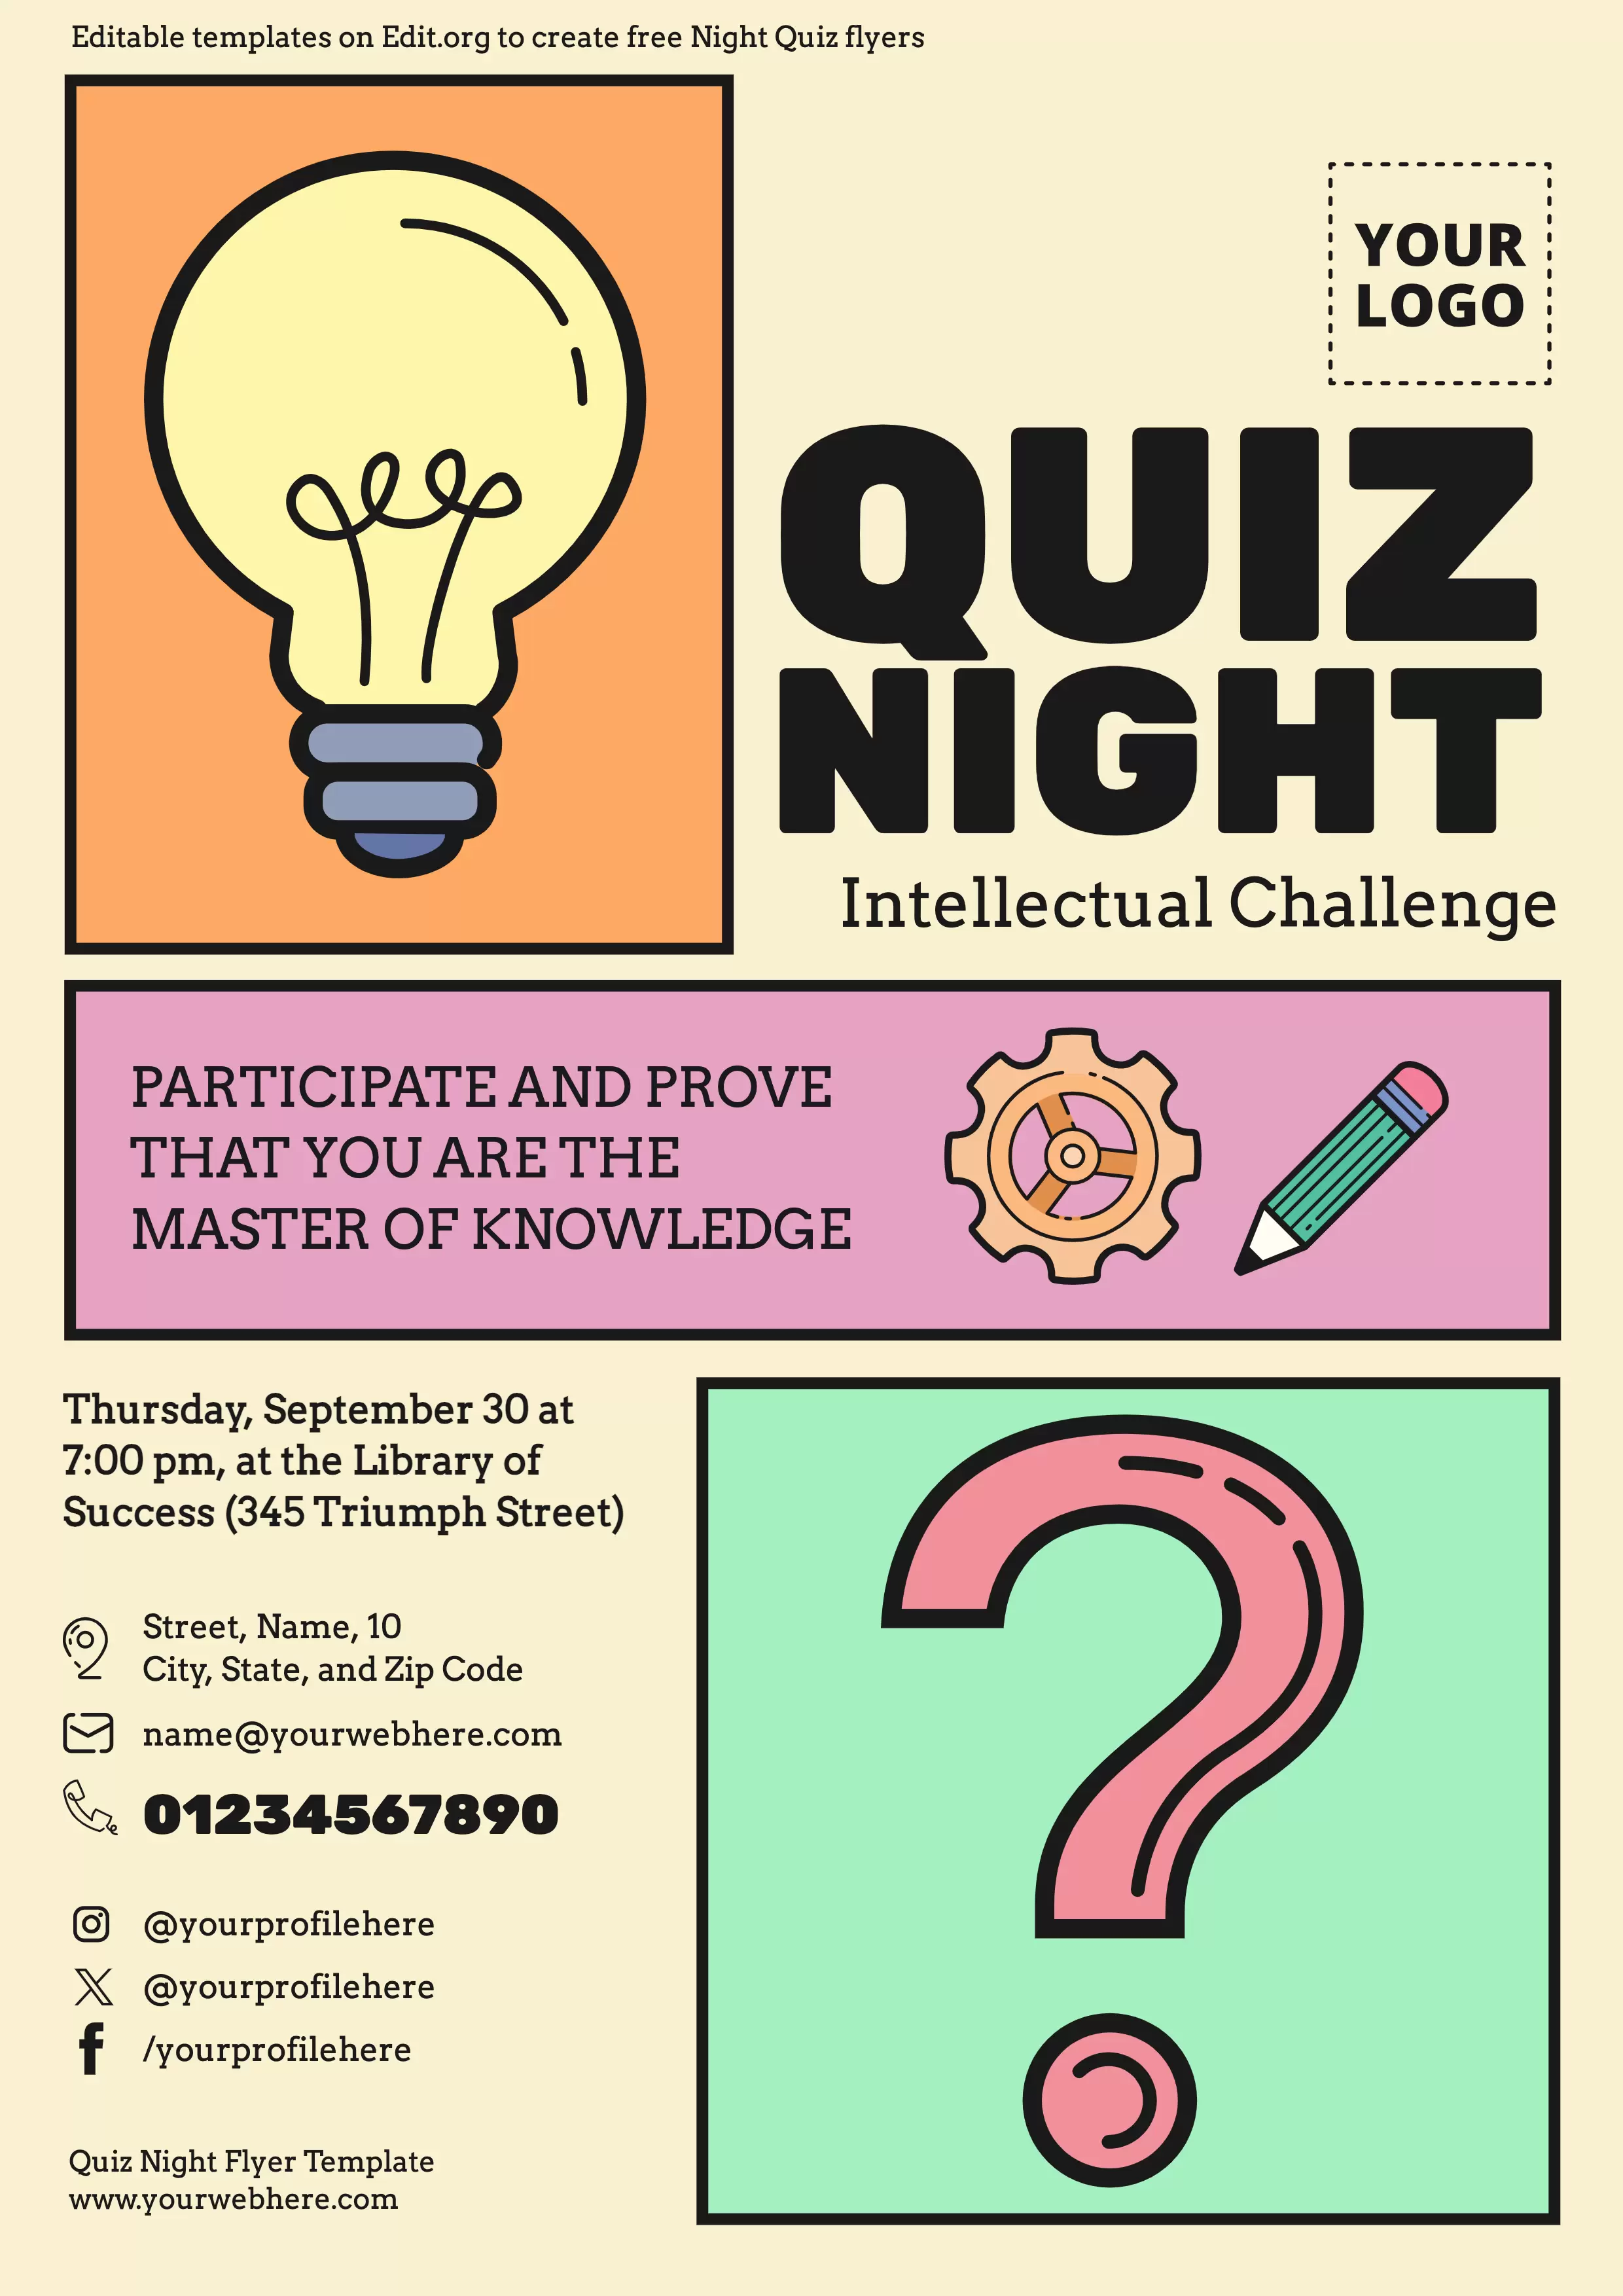 Free Quiz Night flyer template download online